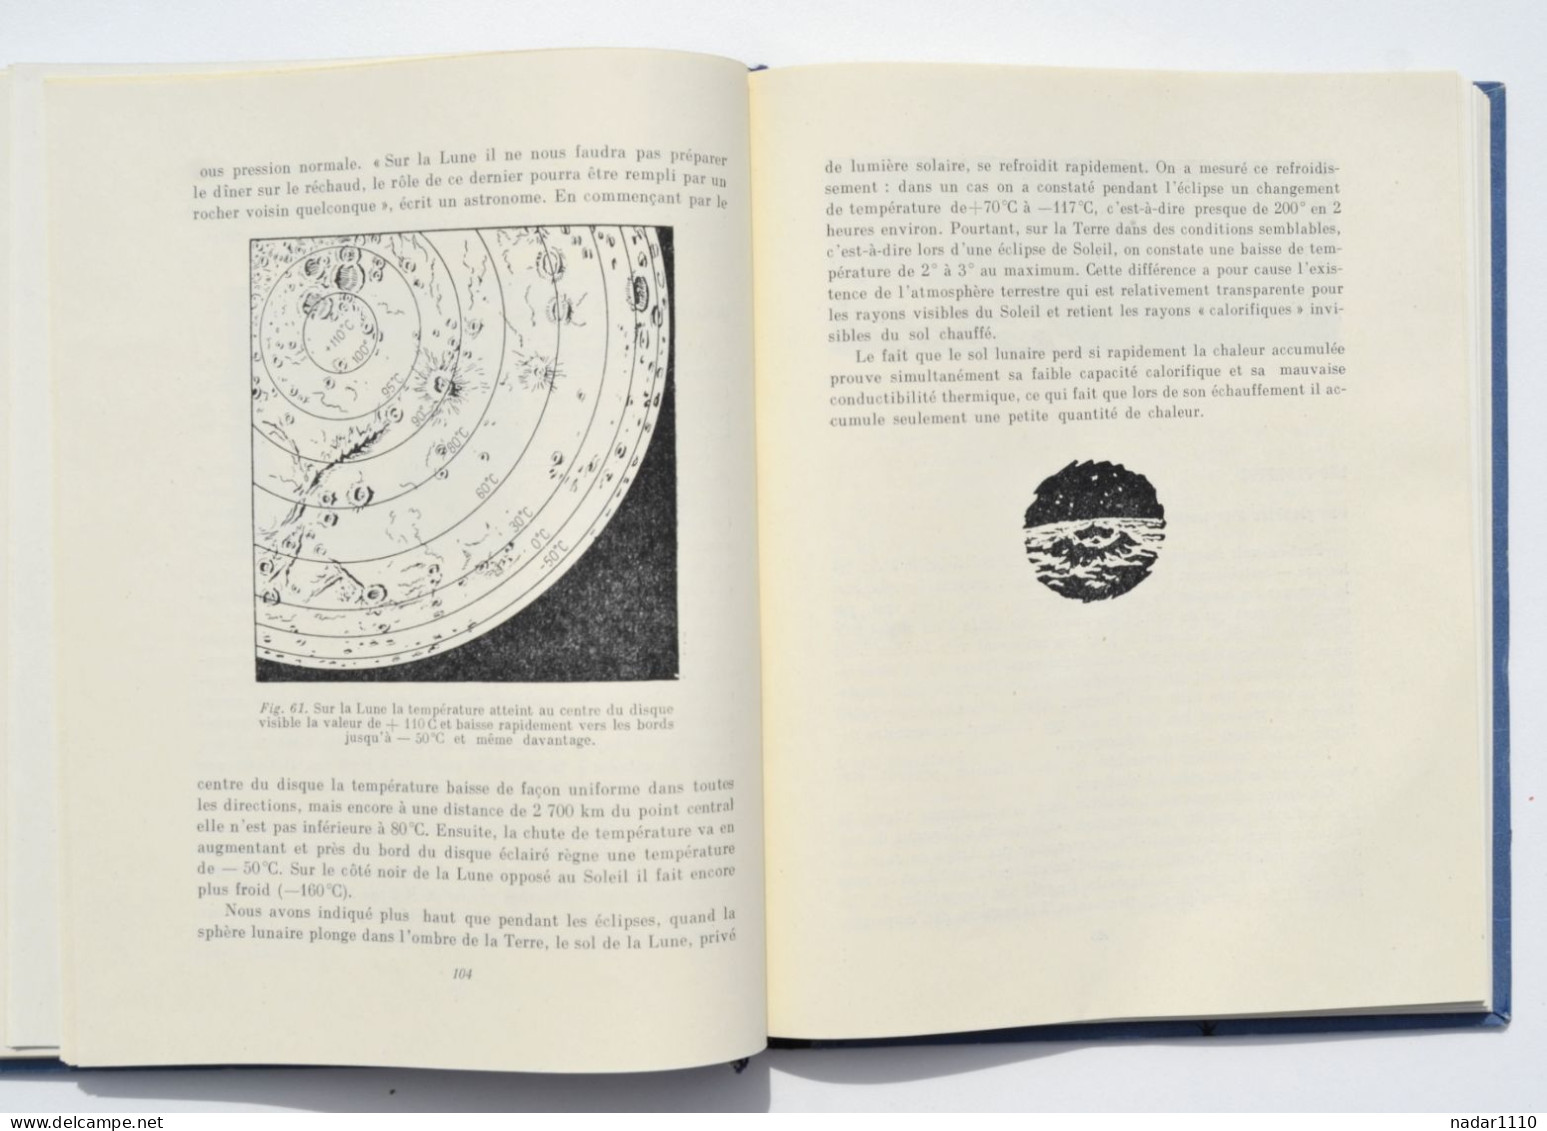 L'Astronomie récréative - Yakov Pérelman - Moscou, 1958 / URSS, Russie